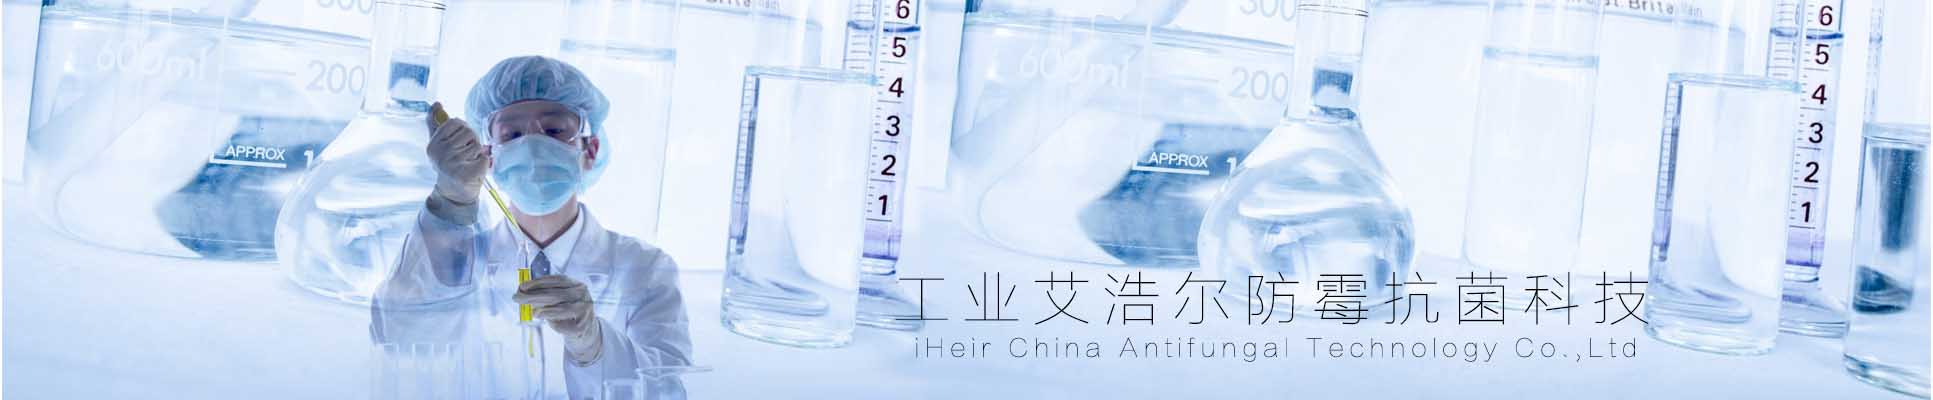 iHeir-H干燥剂吸水性能实验